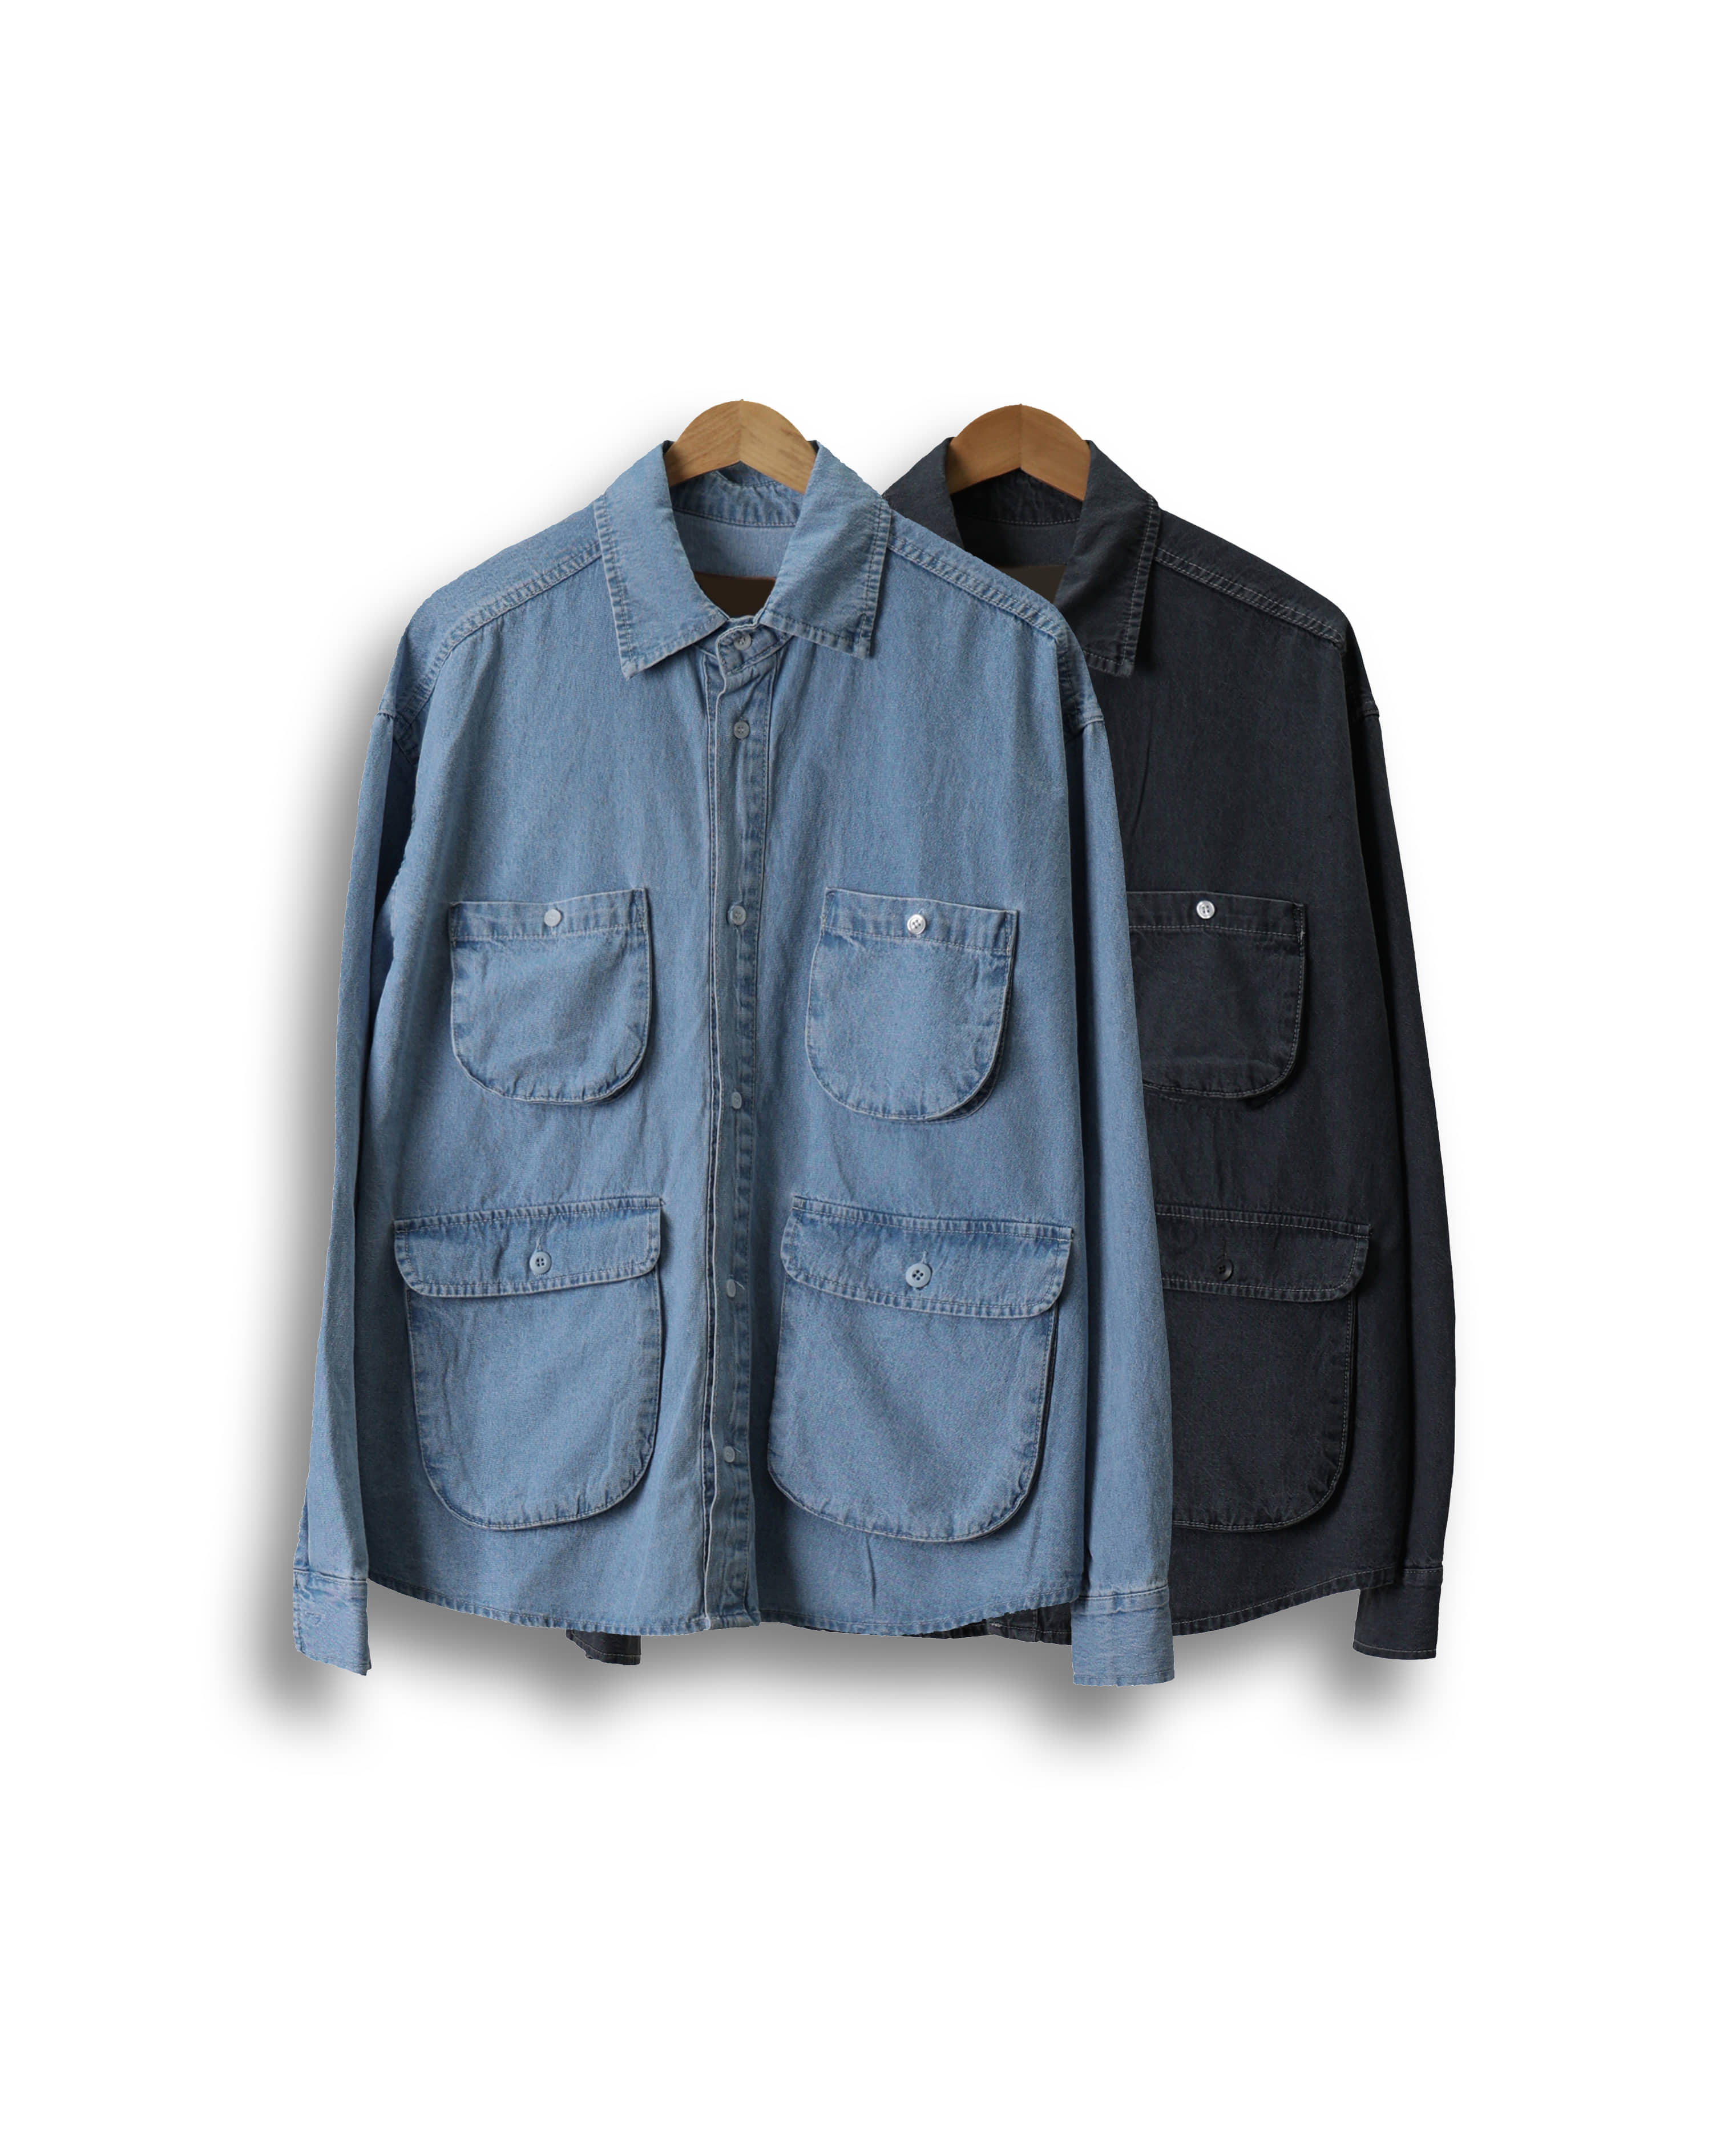 FITS 354 Round Pocket Denim Shirt Jacket (Gray Denim/Light Blue)